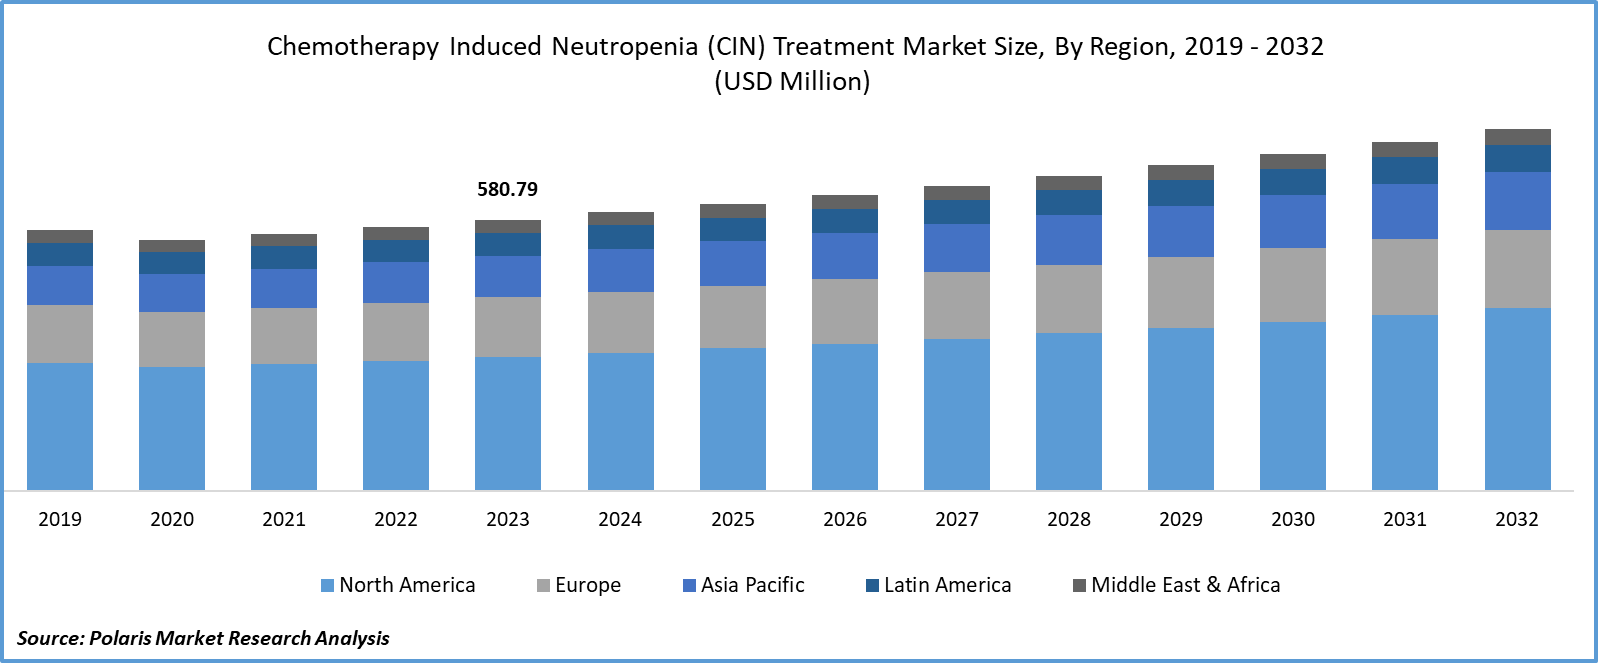 Chemotherapy Induced Neutropenia (CIN) Treatment Market Size